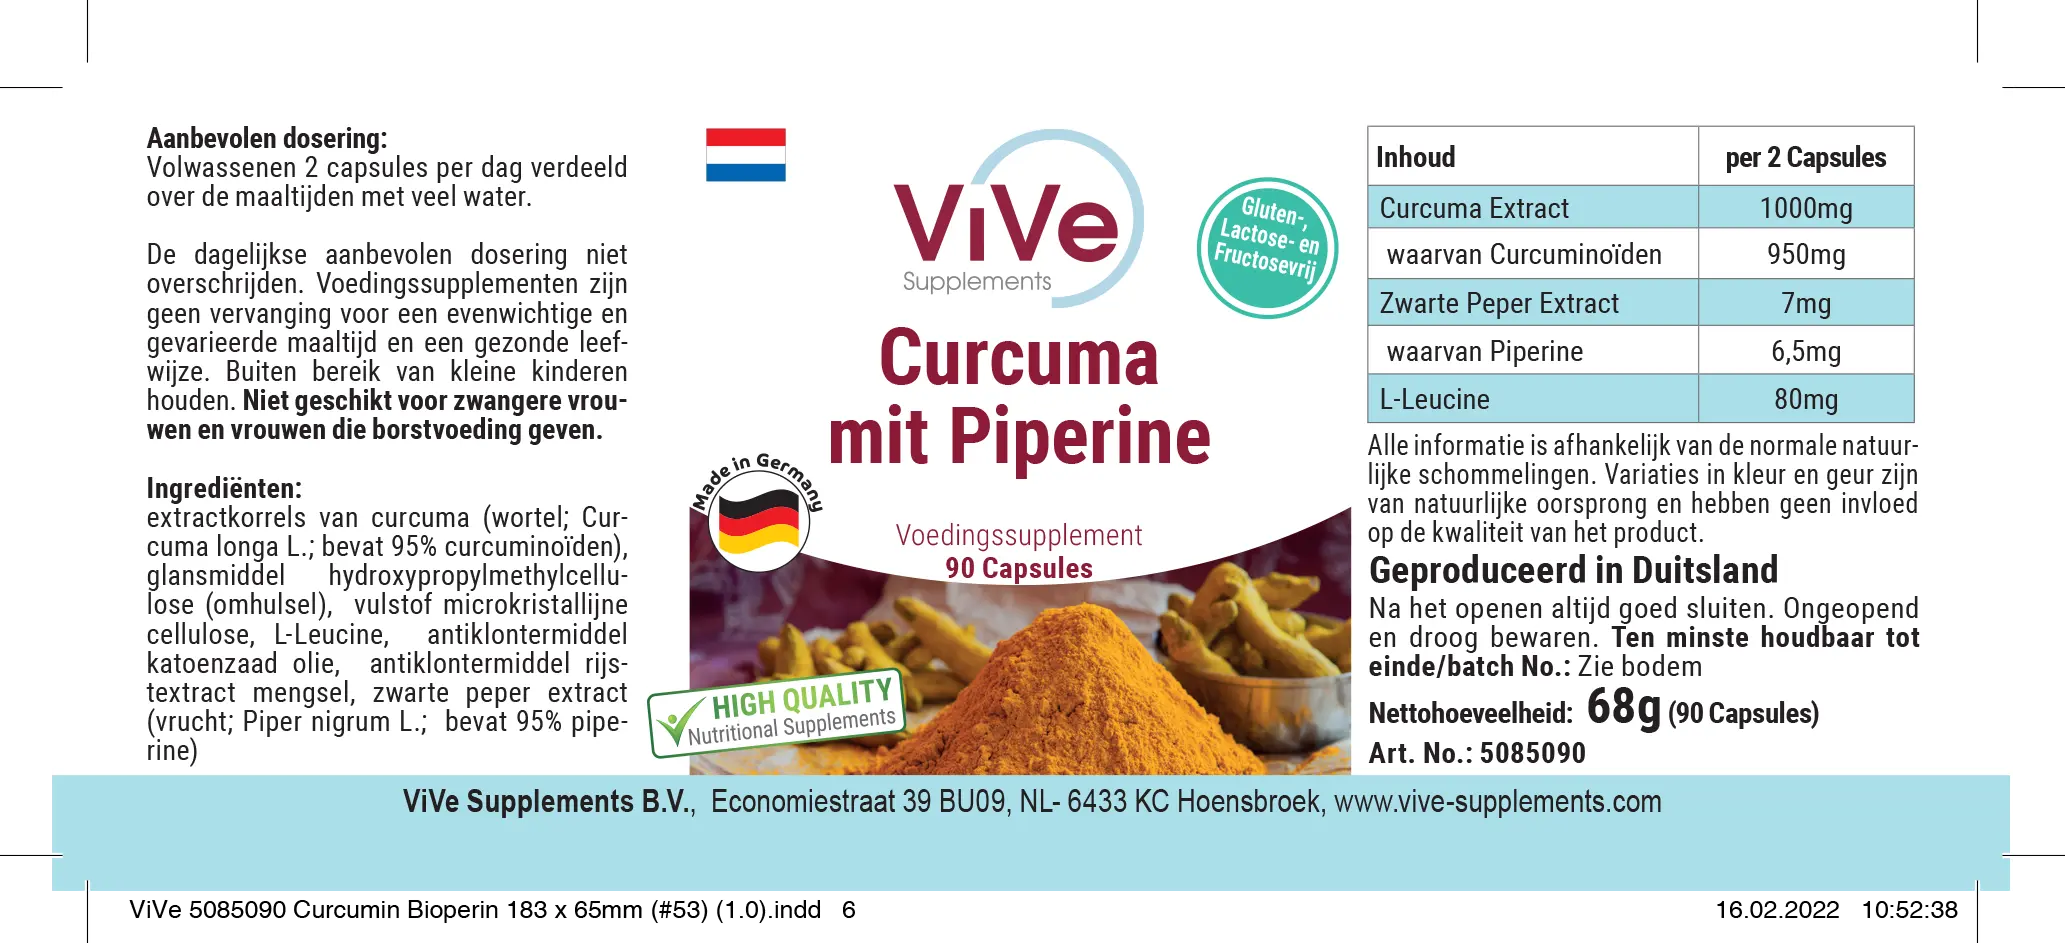 Curcuma with Piperine